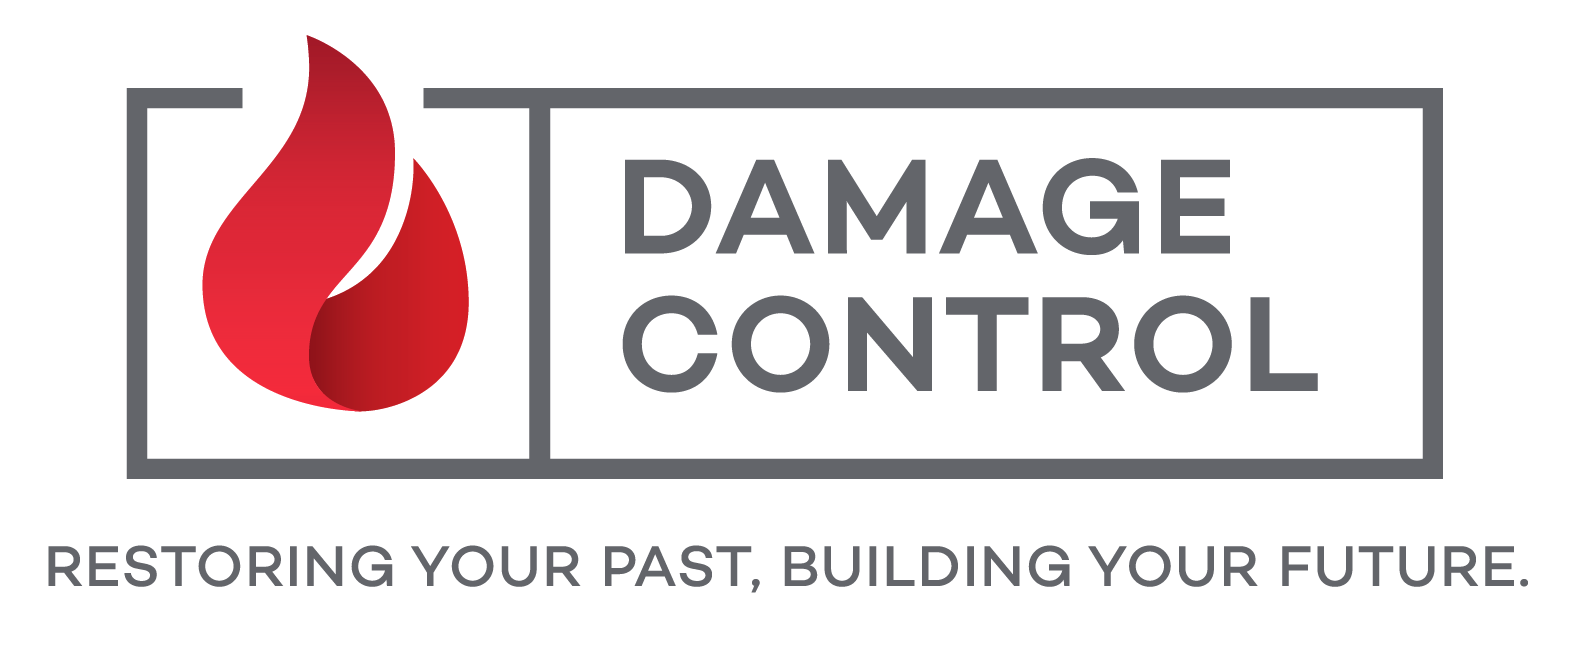 Damage Control Restoration